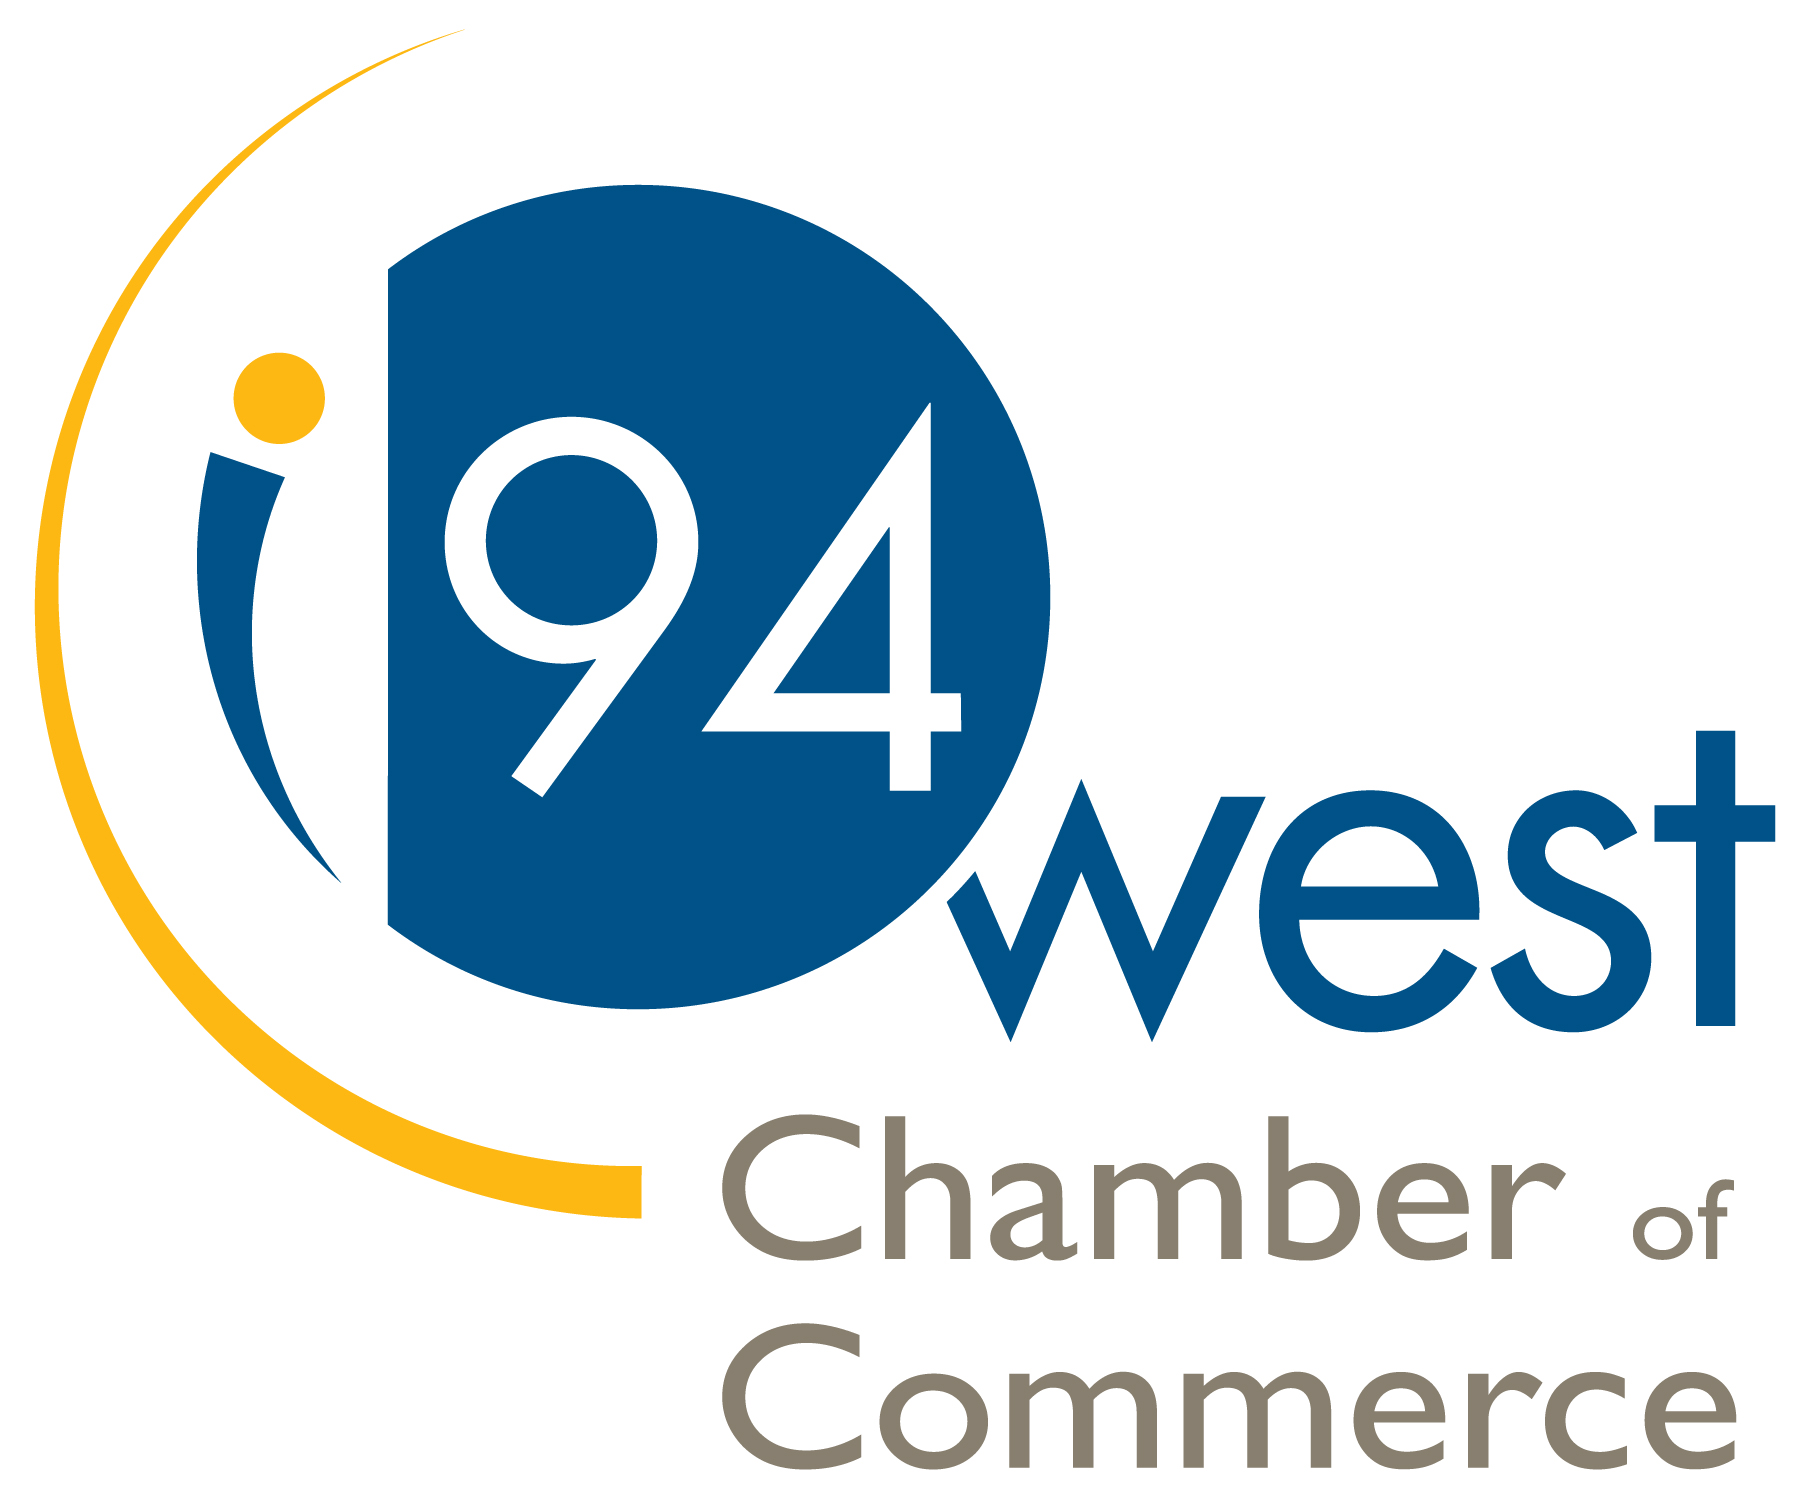 I-94 West Chamber of Commerce logo